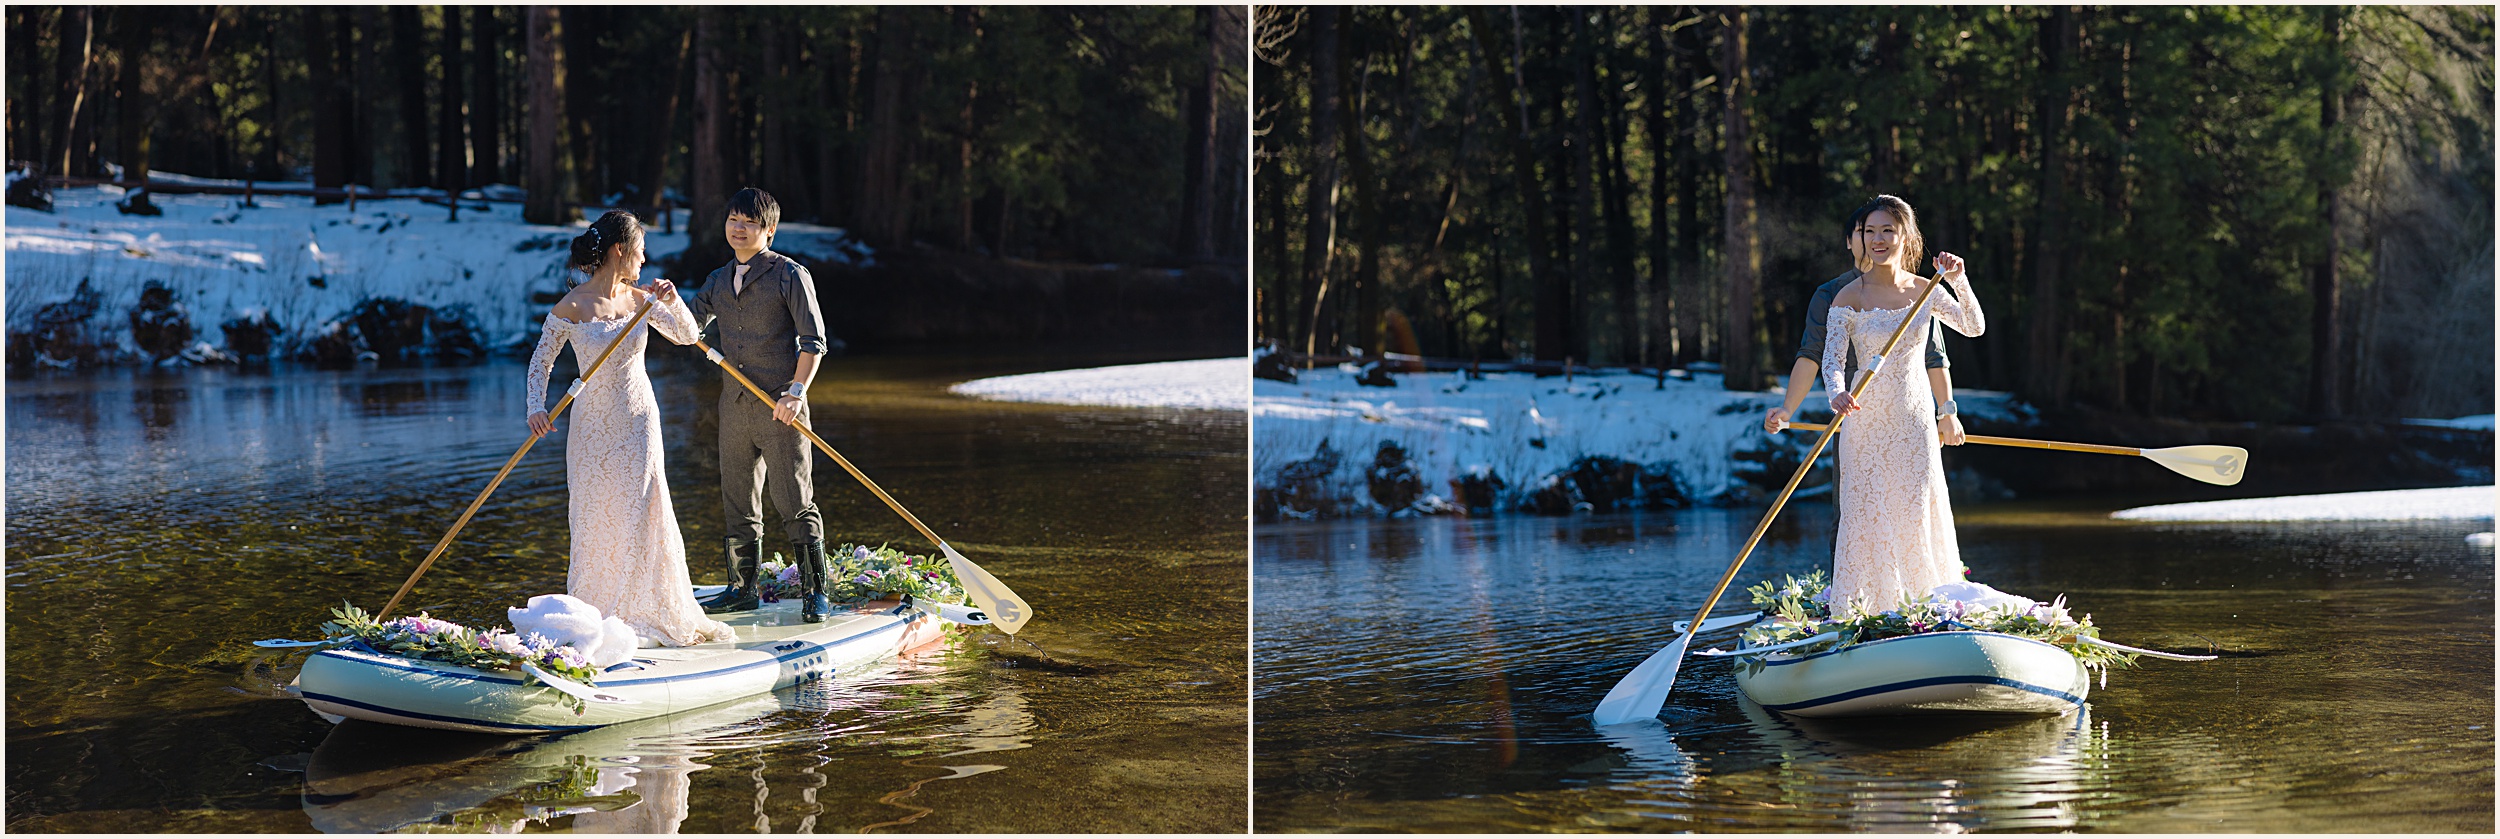 Lexi-and-Lee-49 Yosemite Adventure Elopement: Kayaking & Paddleboarding in Yosemite National Park